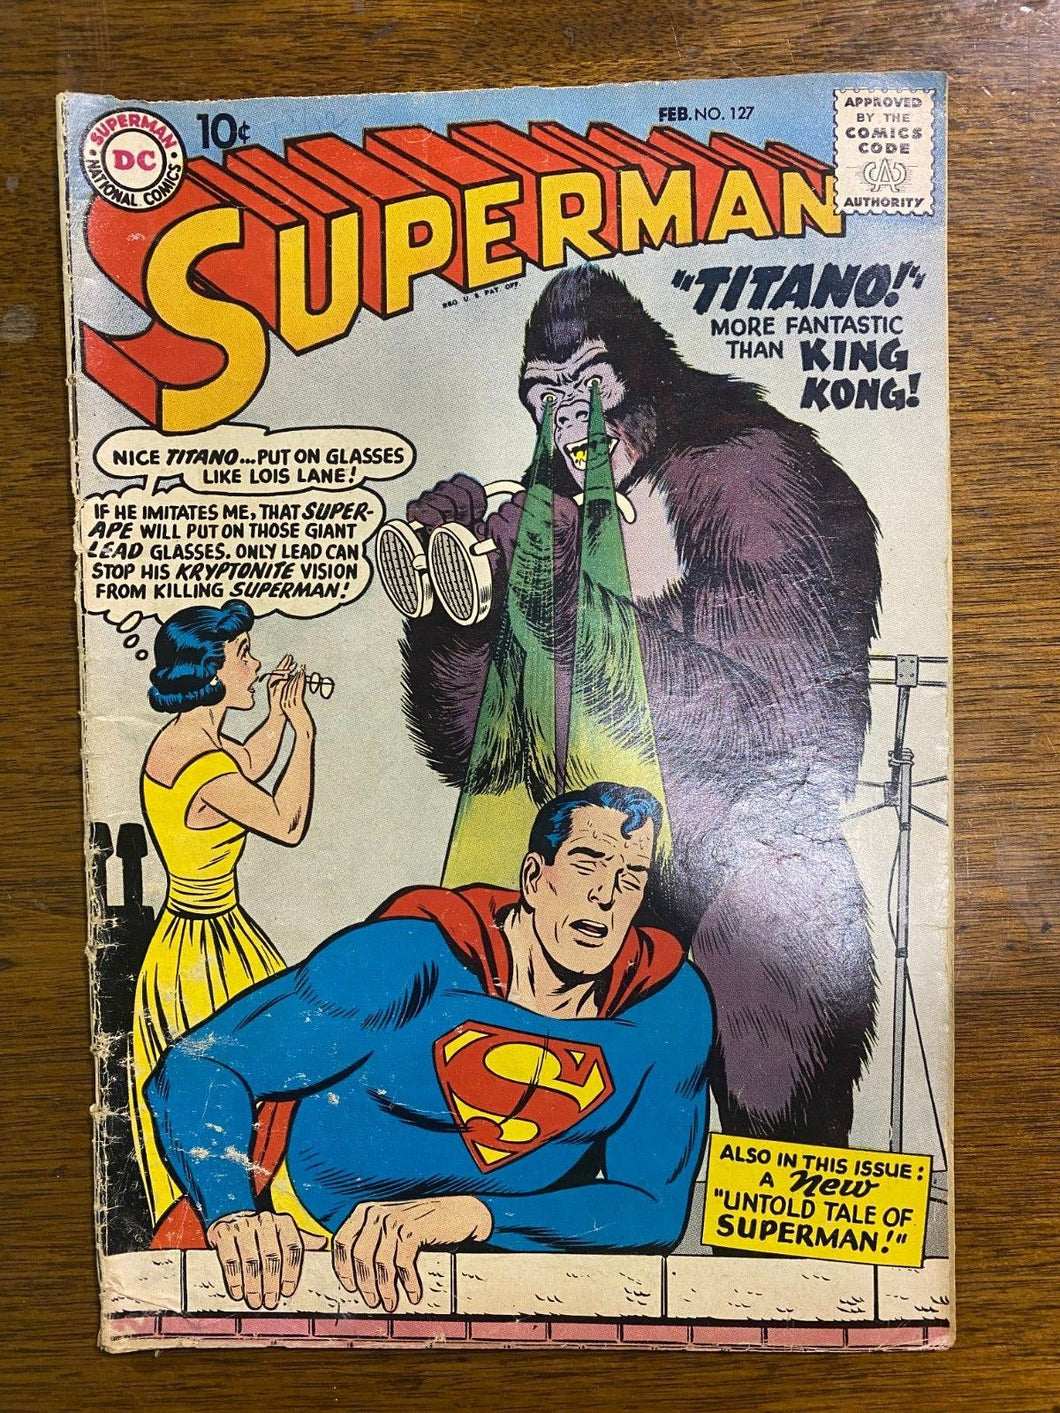 1959 DC Comics Superman Issue 127